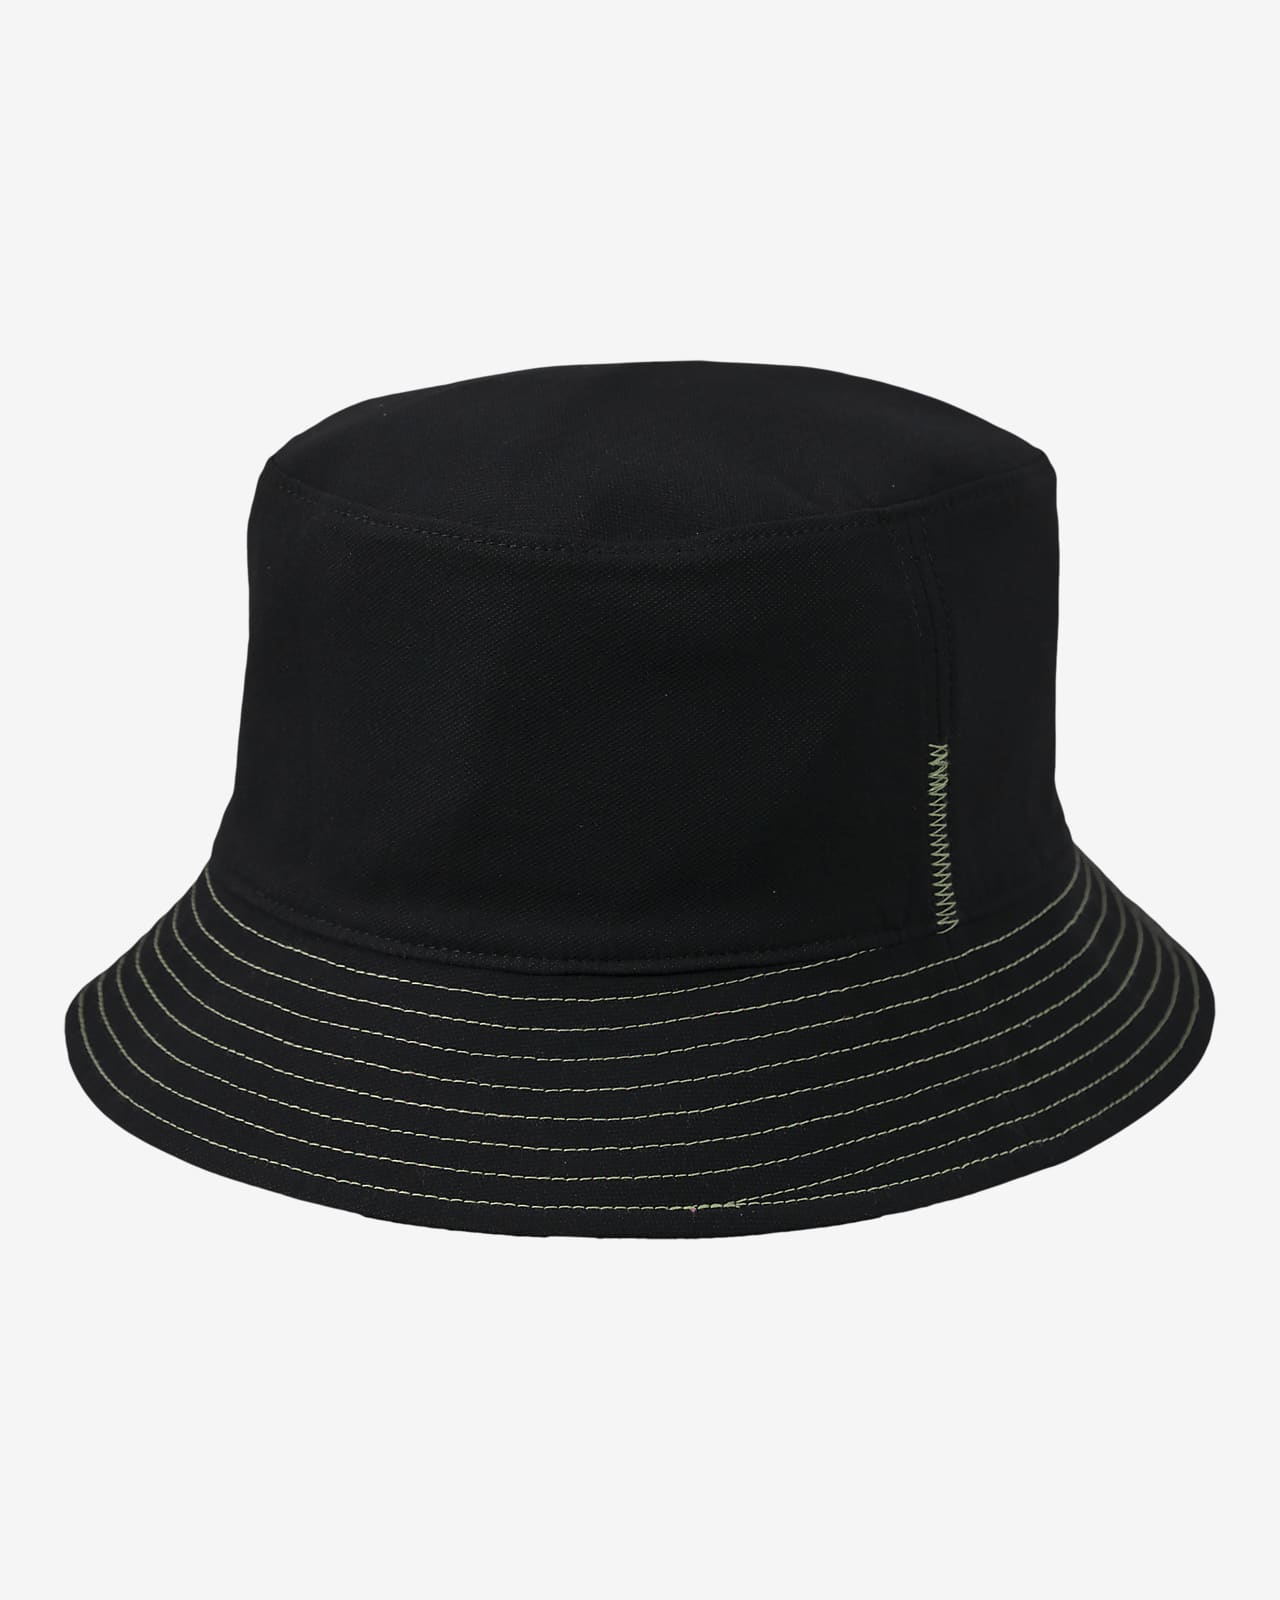 Nike Golf Reversible Bucket Hat